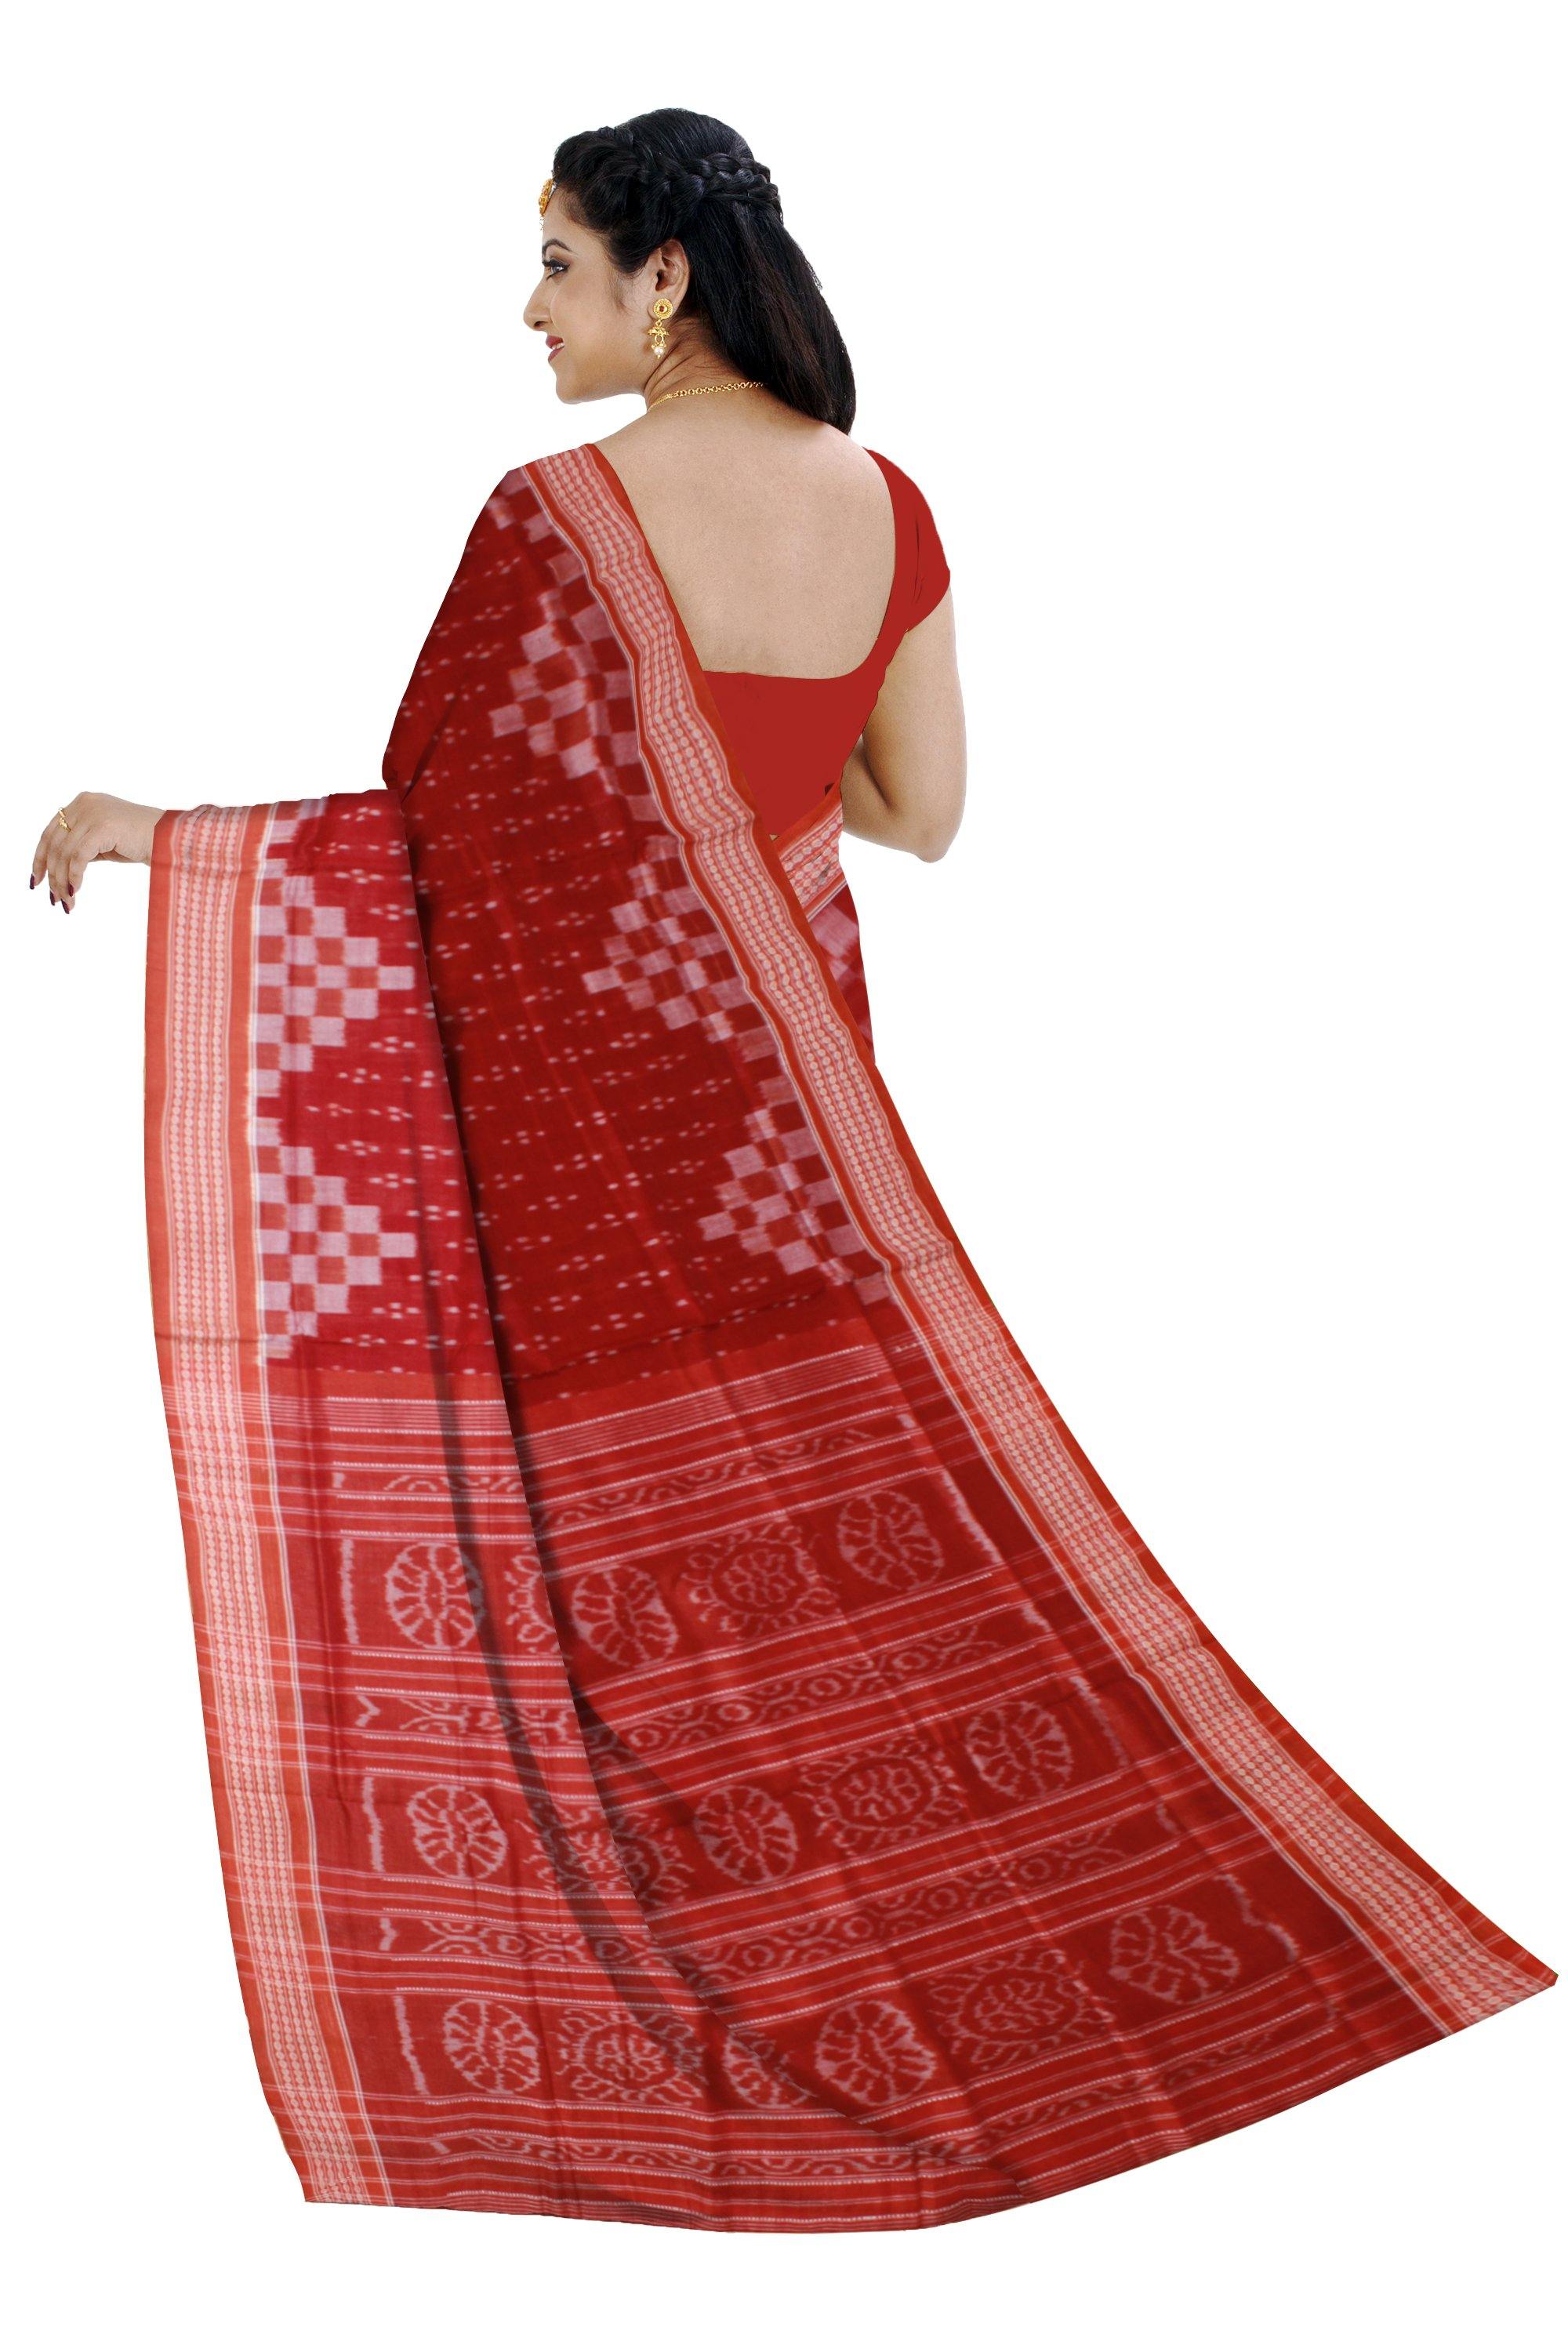 Latest Design big sapta print maroon color saree with out blouse piece - Koshali Arts & Crafts Enterprise